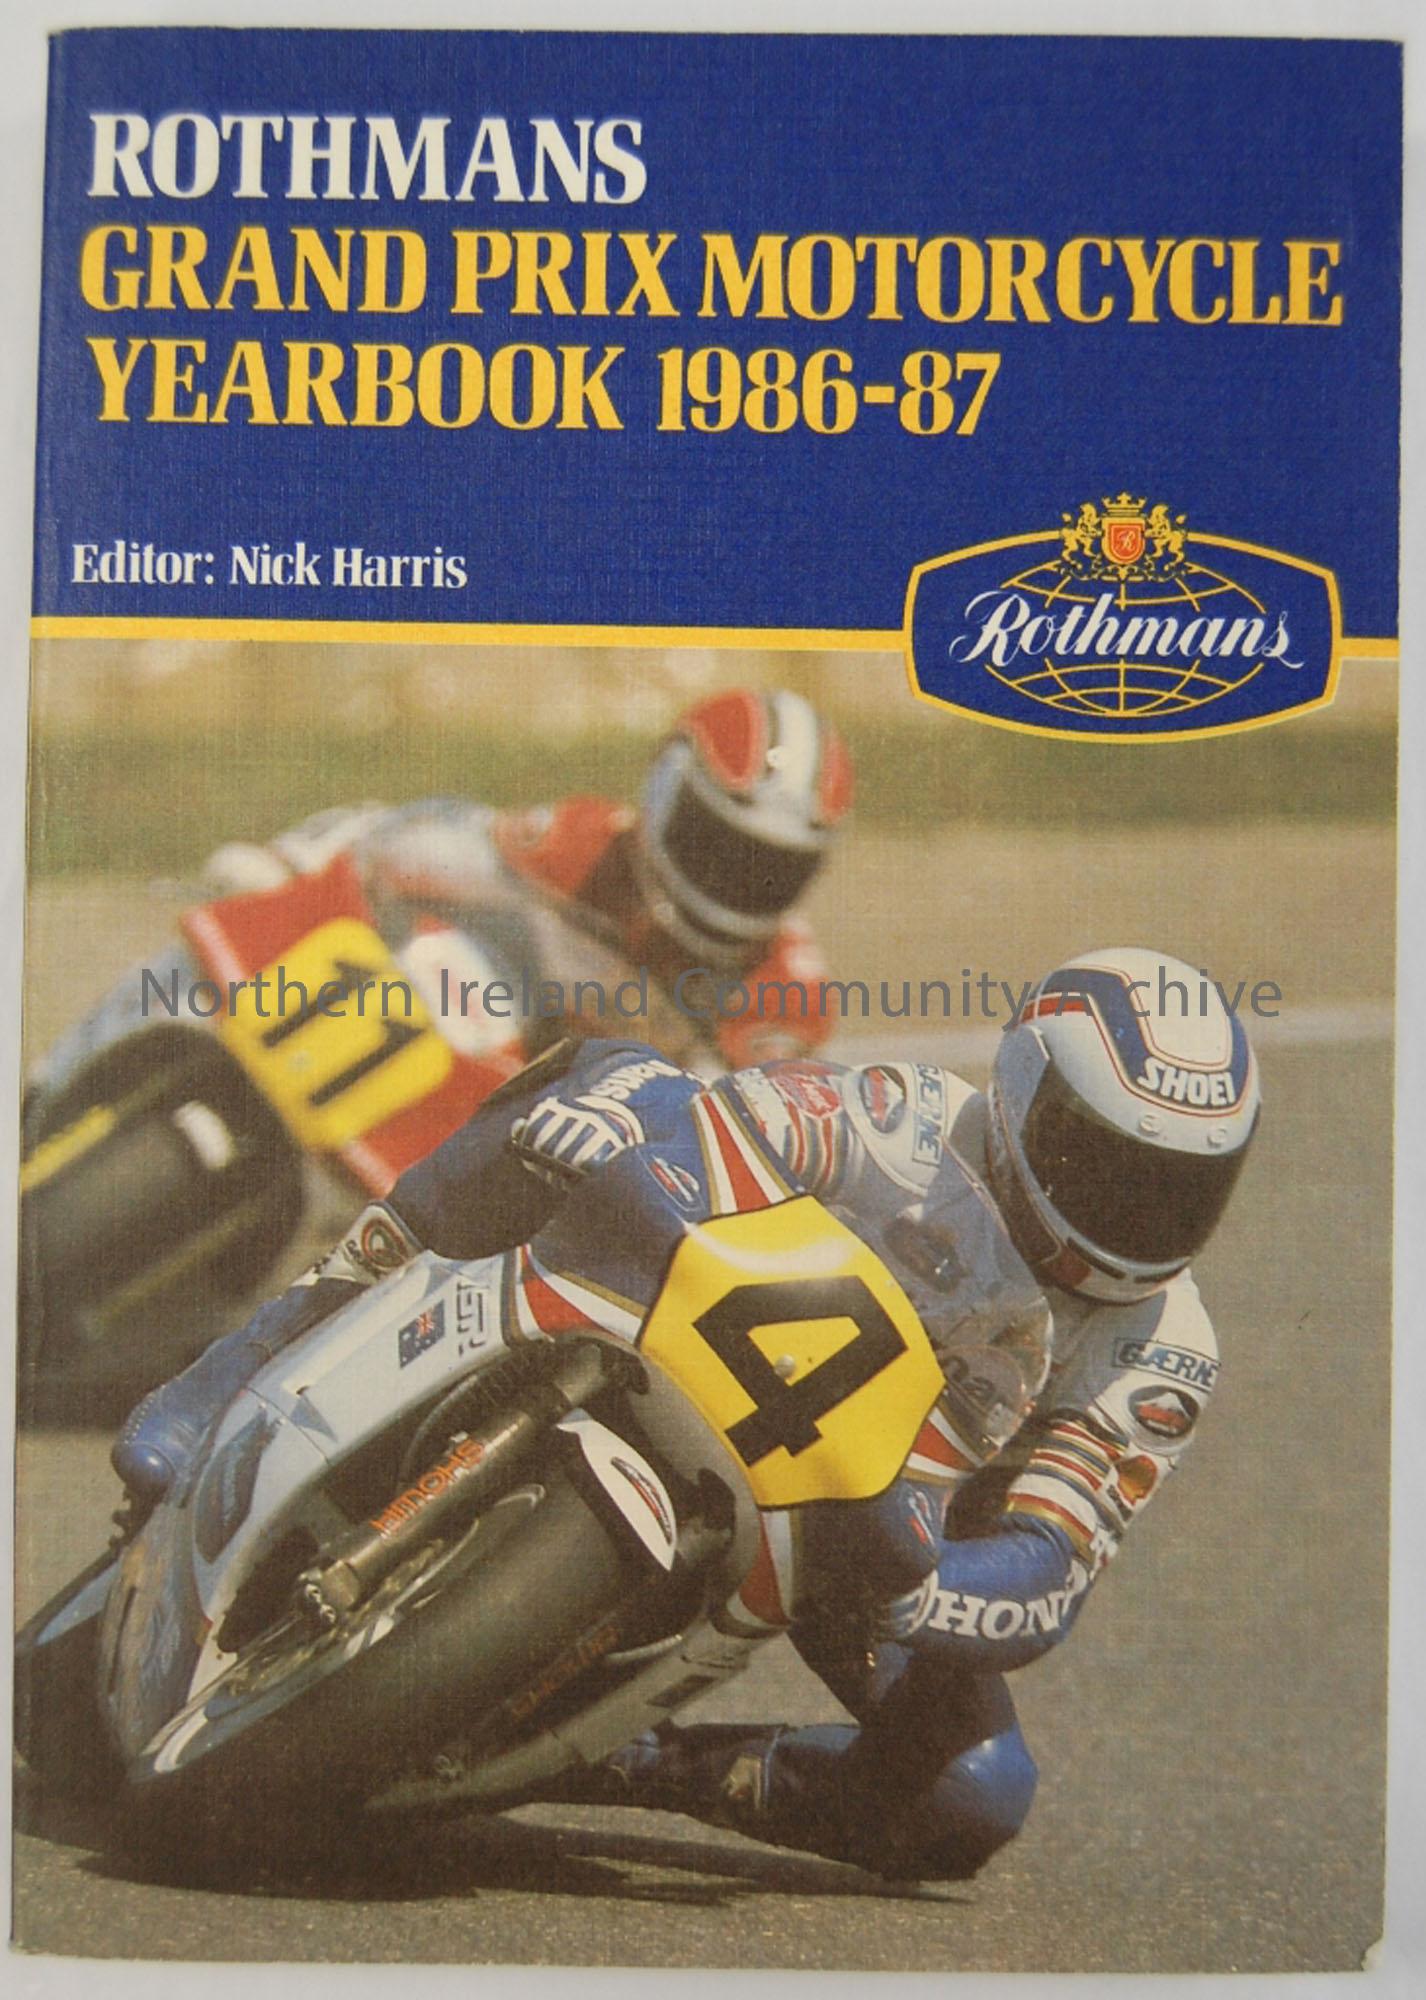 Rothmans Grand Prix Motorcycle Yearbook 1986-87. Editor Nick Harris